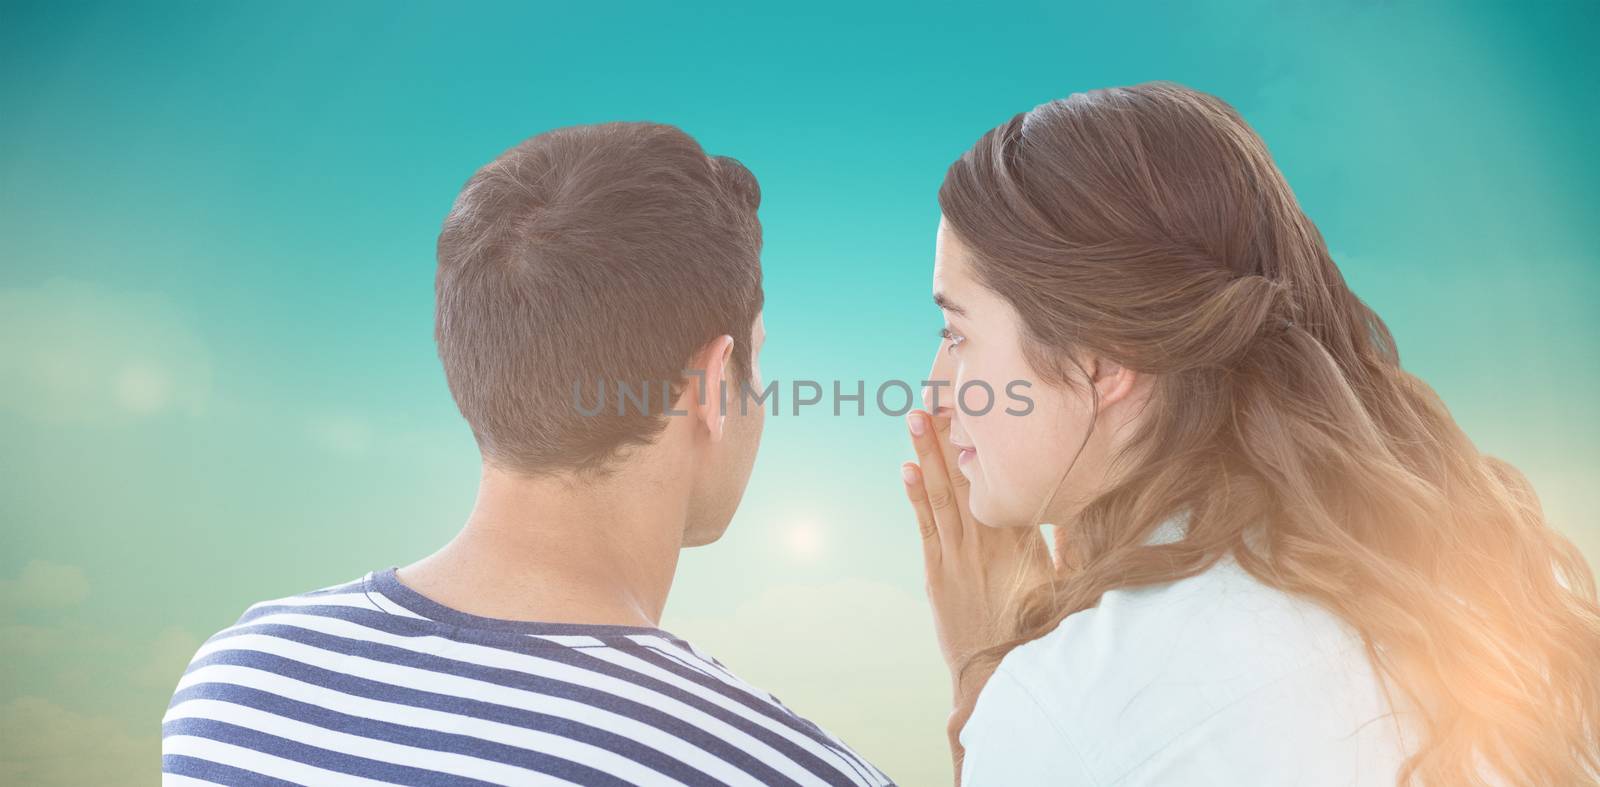 Woman whispering secret to boyfriend against blue green background